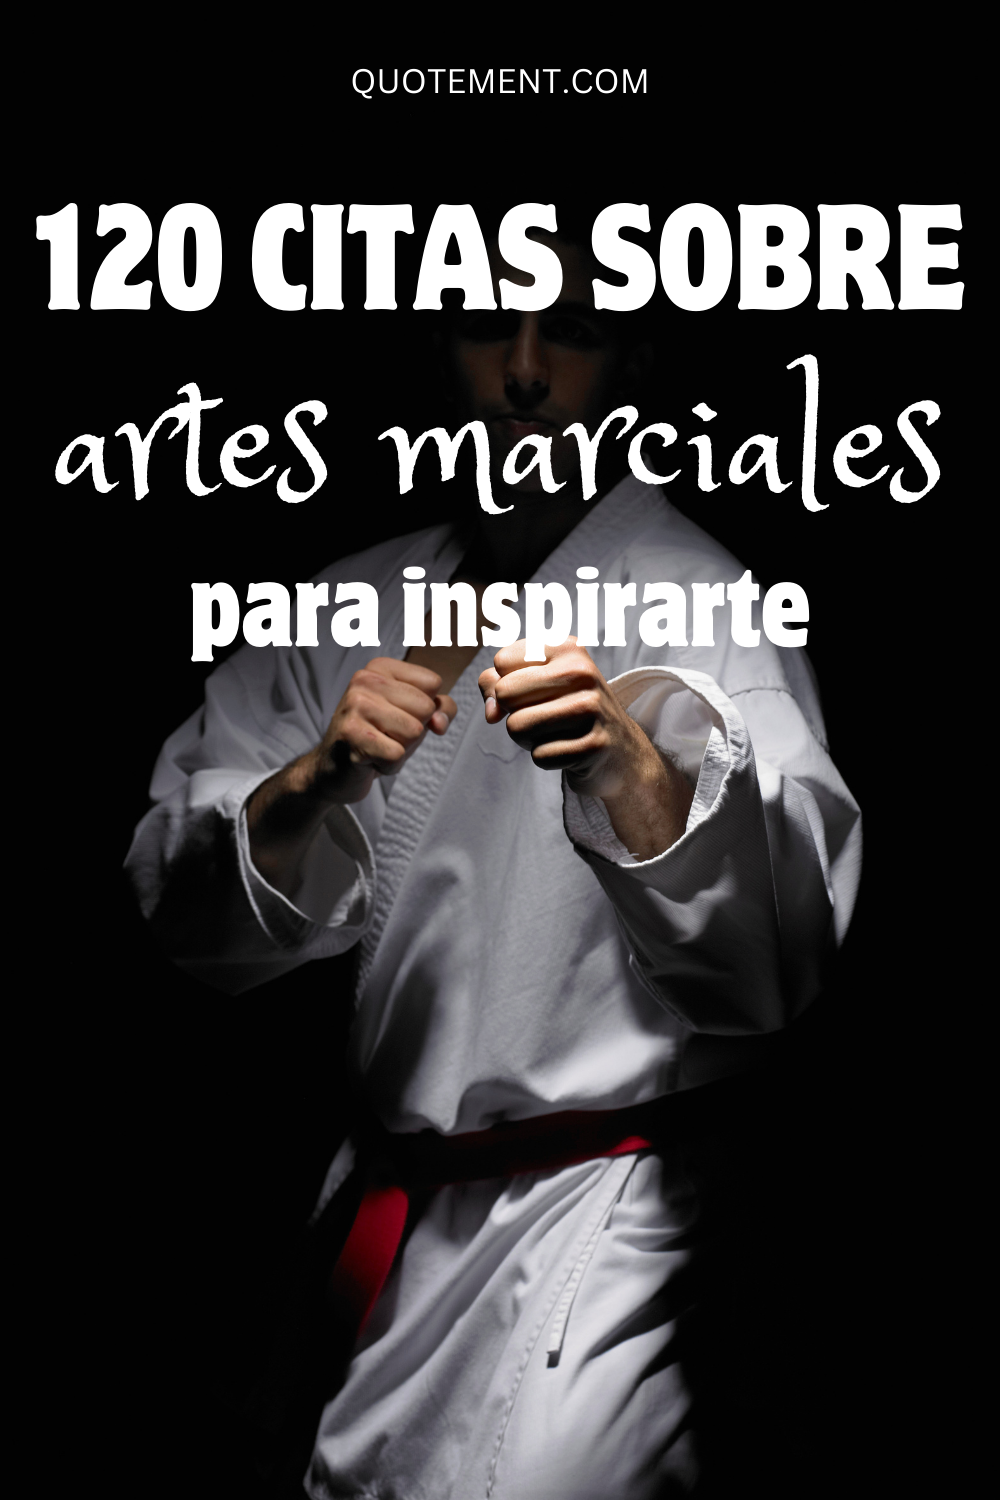 120 poderosas citas sobre artes marciales para inspirarte y motivarte